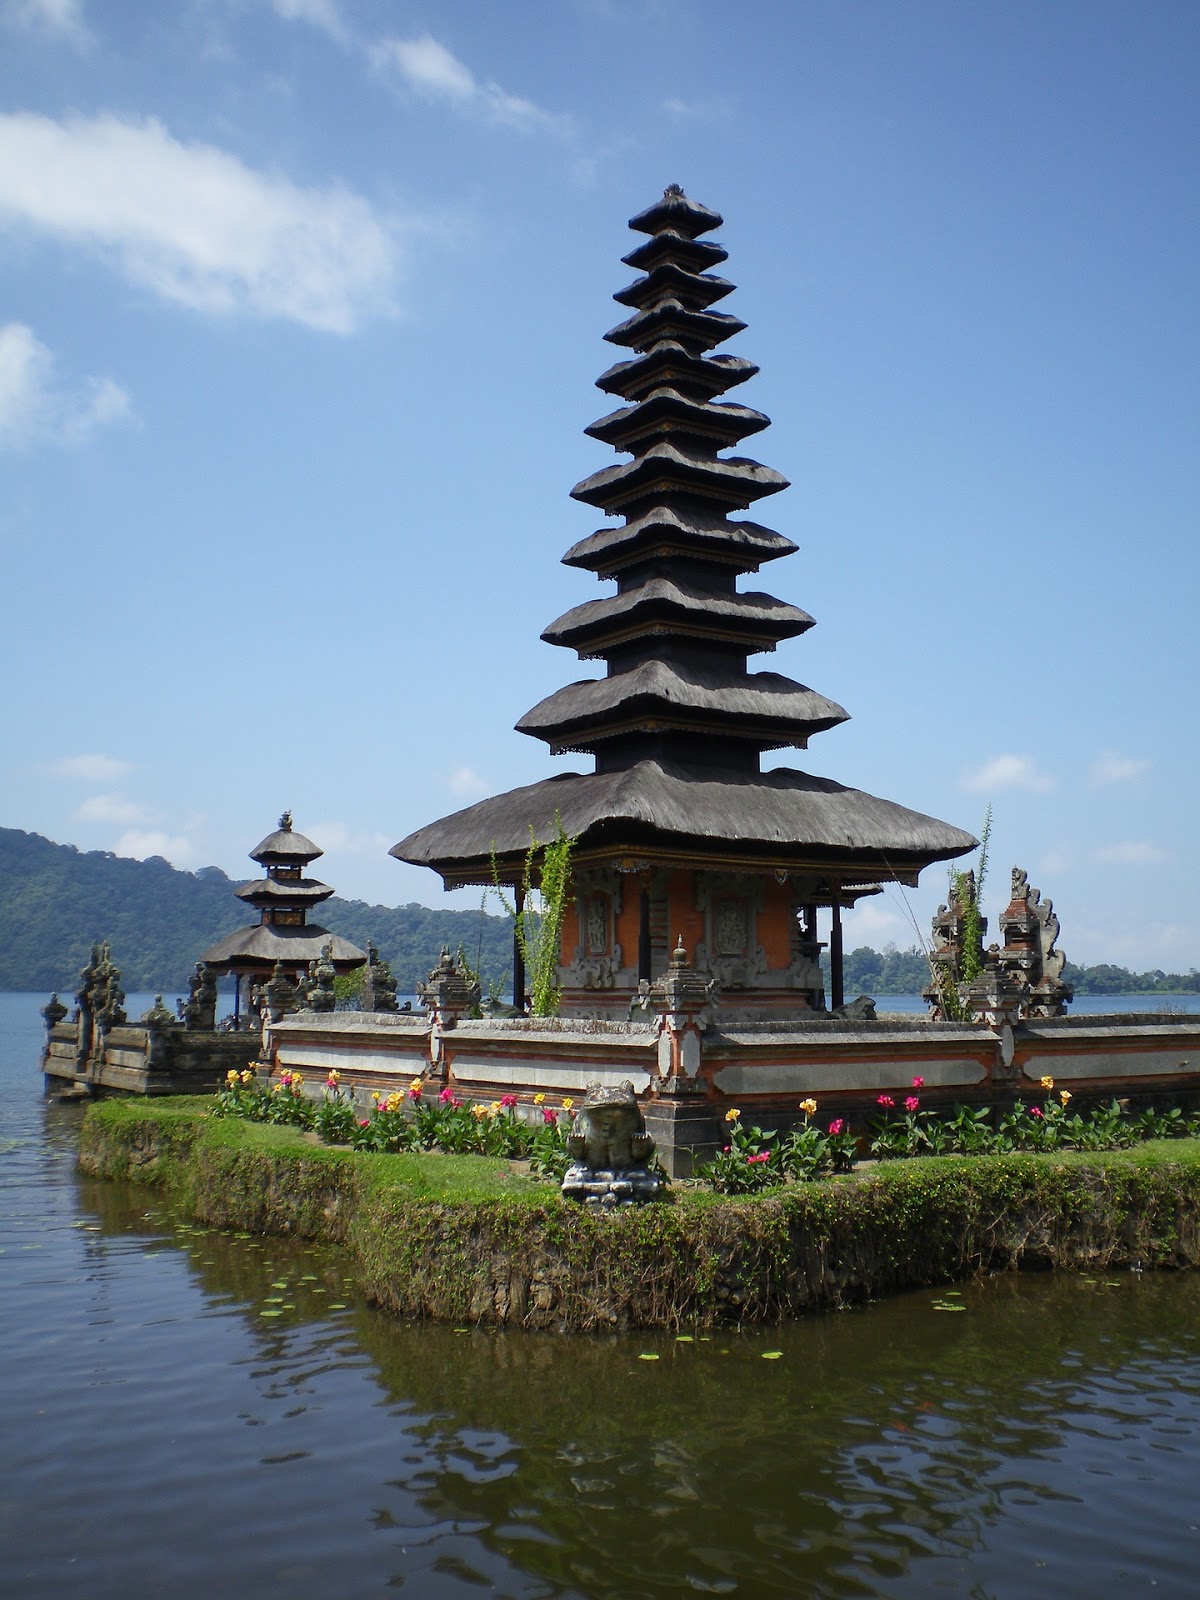 Inilah 5 Tempat  Wisata  di  Bali  Selain  Pantai  Advencious